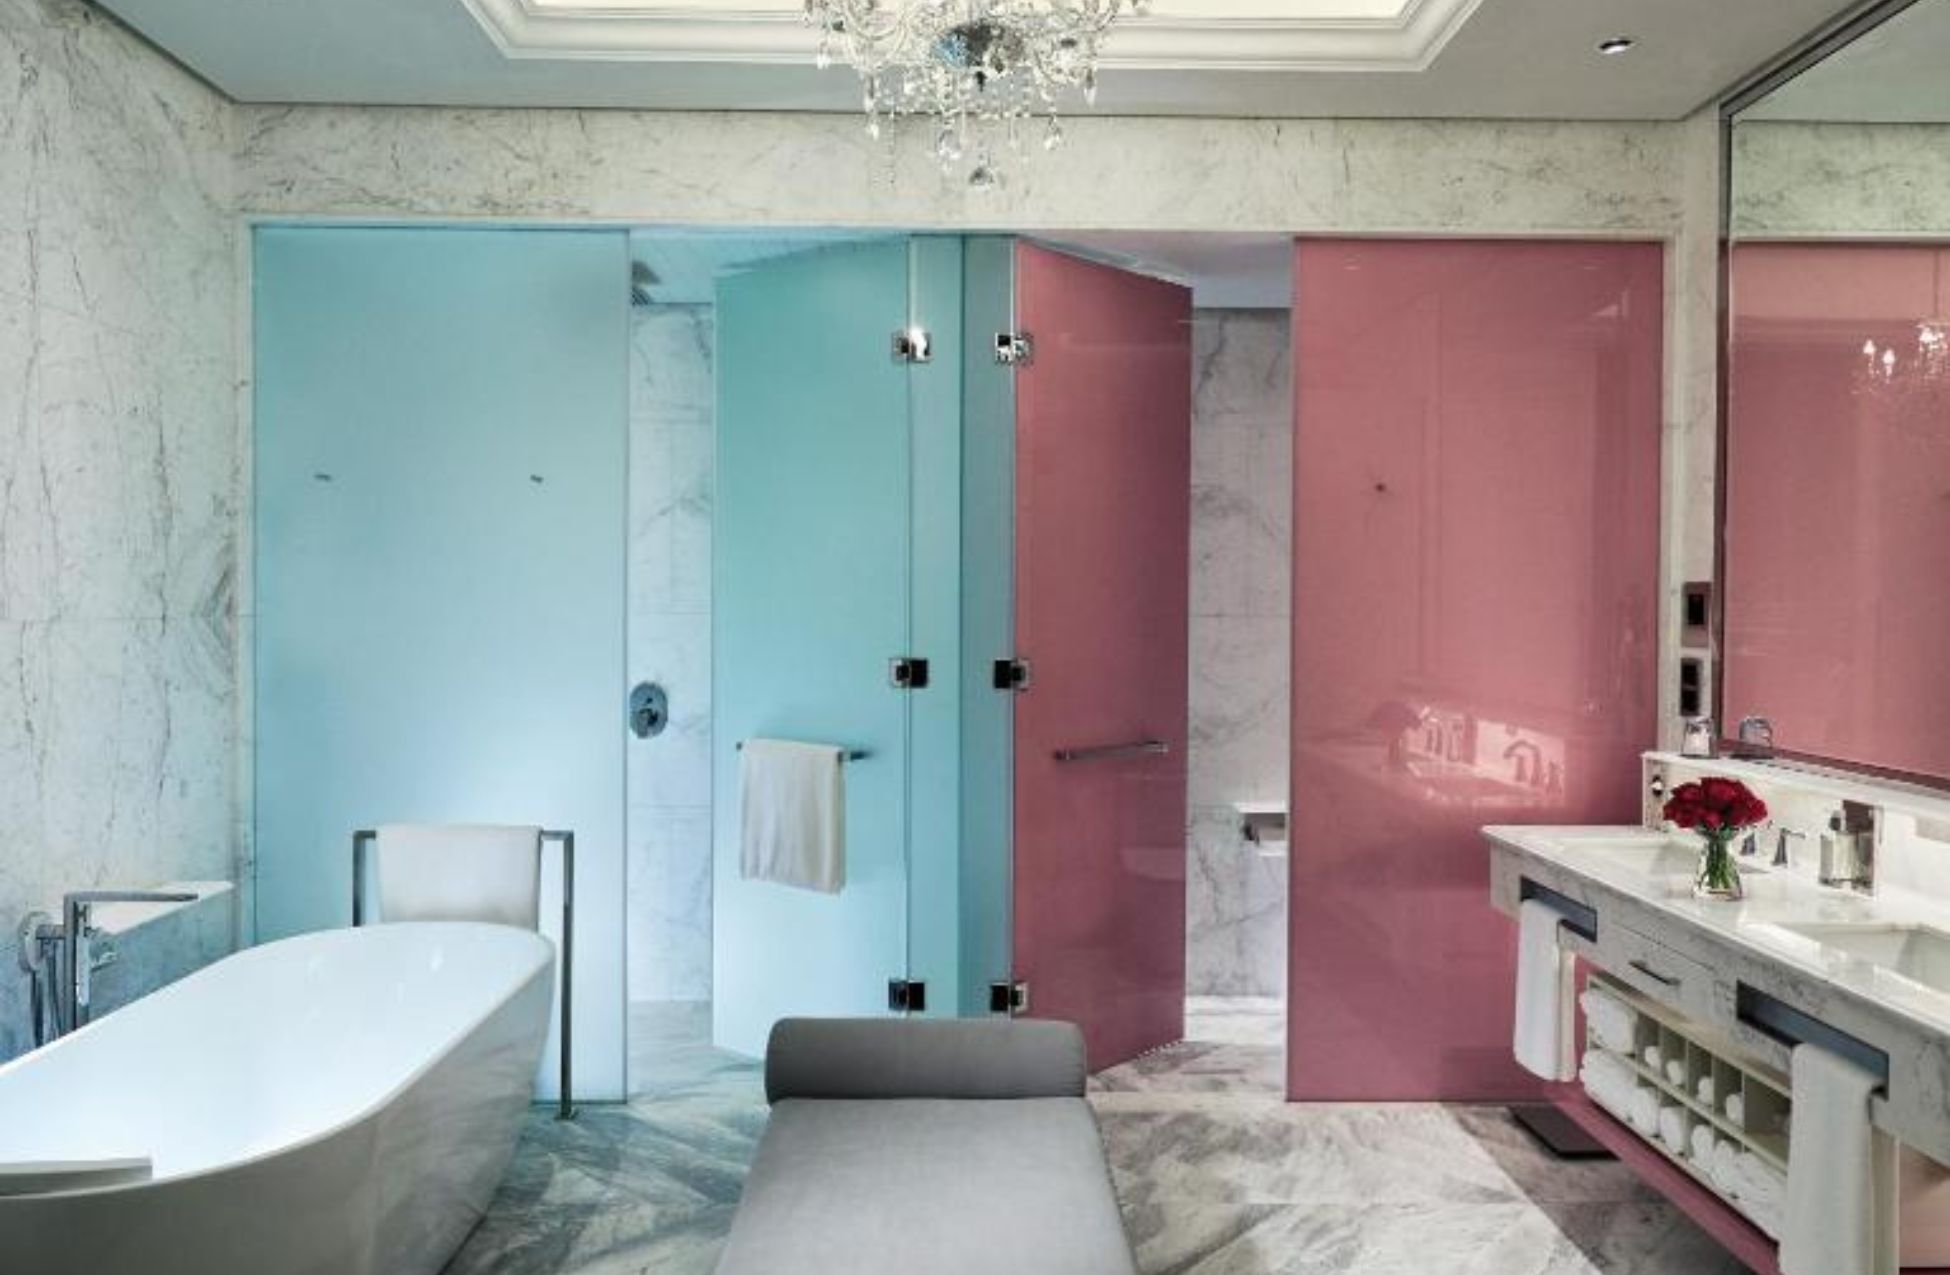 Crockfords At Resorts World Genting - Best Hotels In Kuala Lumpur